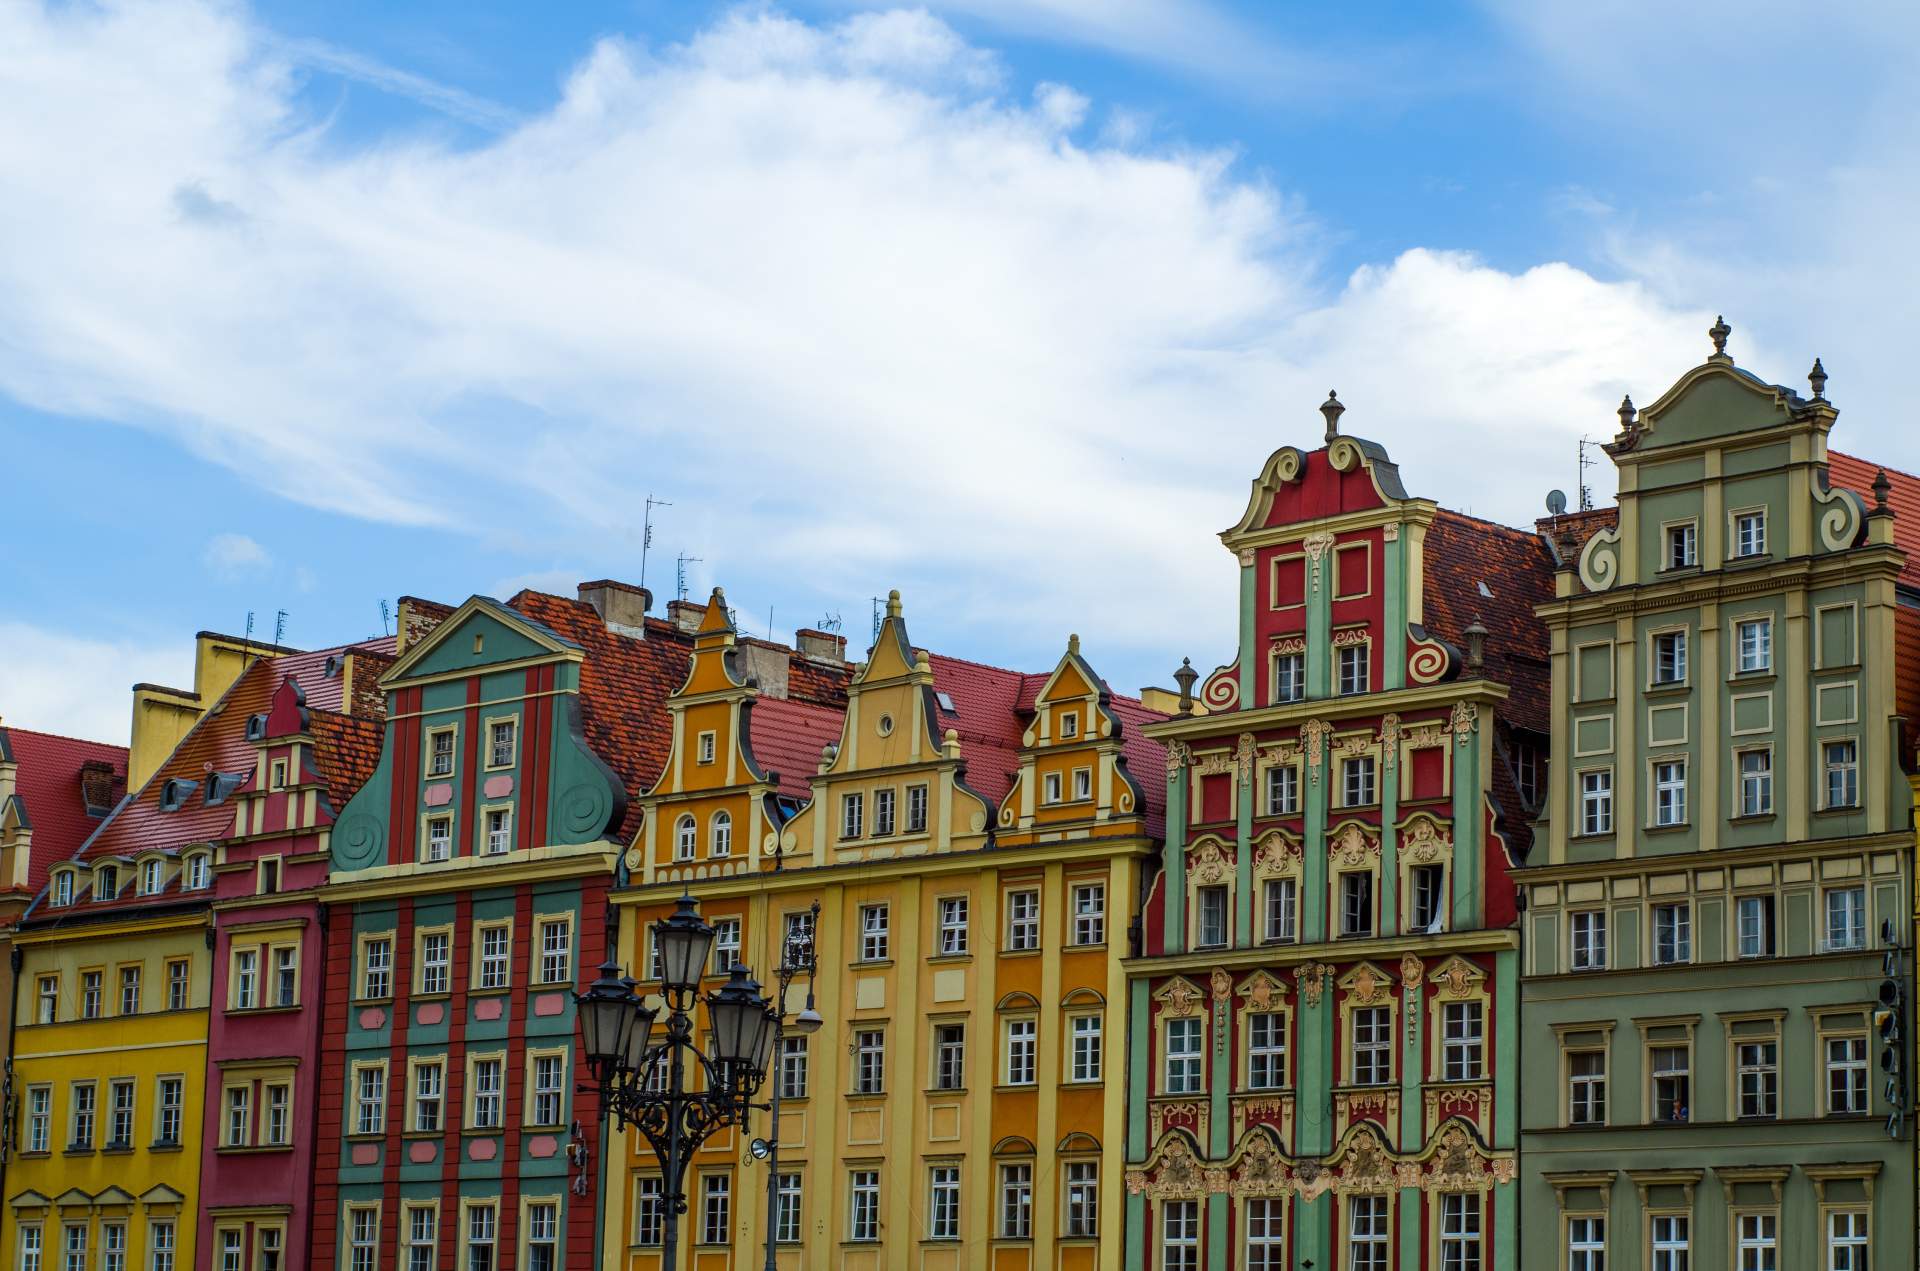 Busreis rondreis Polen - Wroclaw ©studio500mm from Pixabay